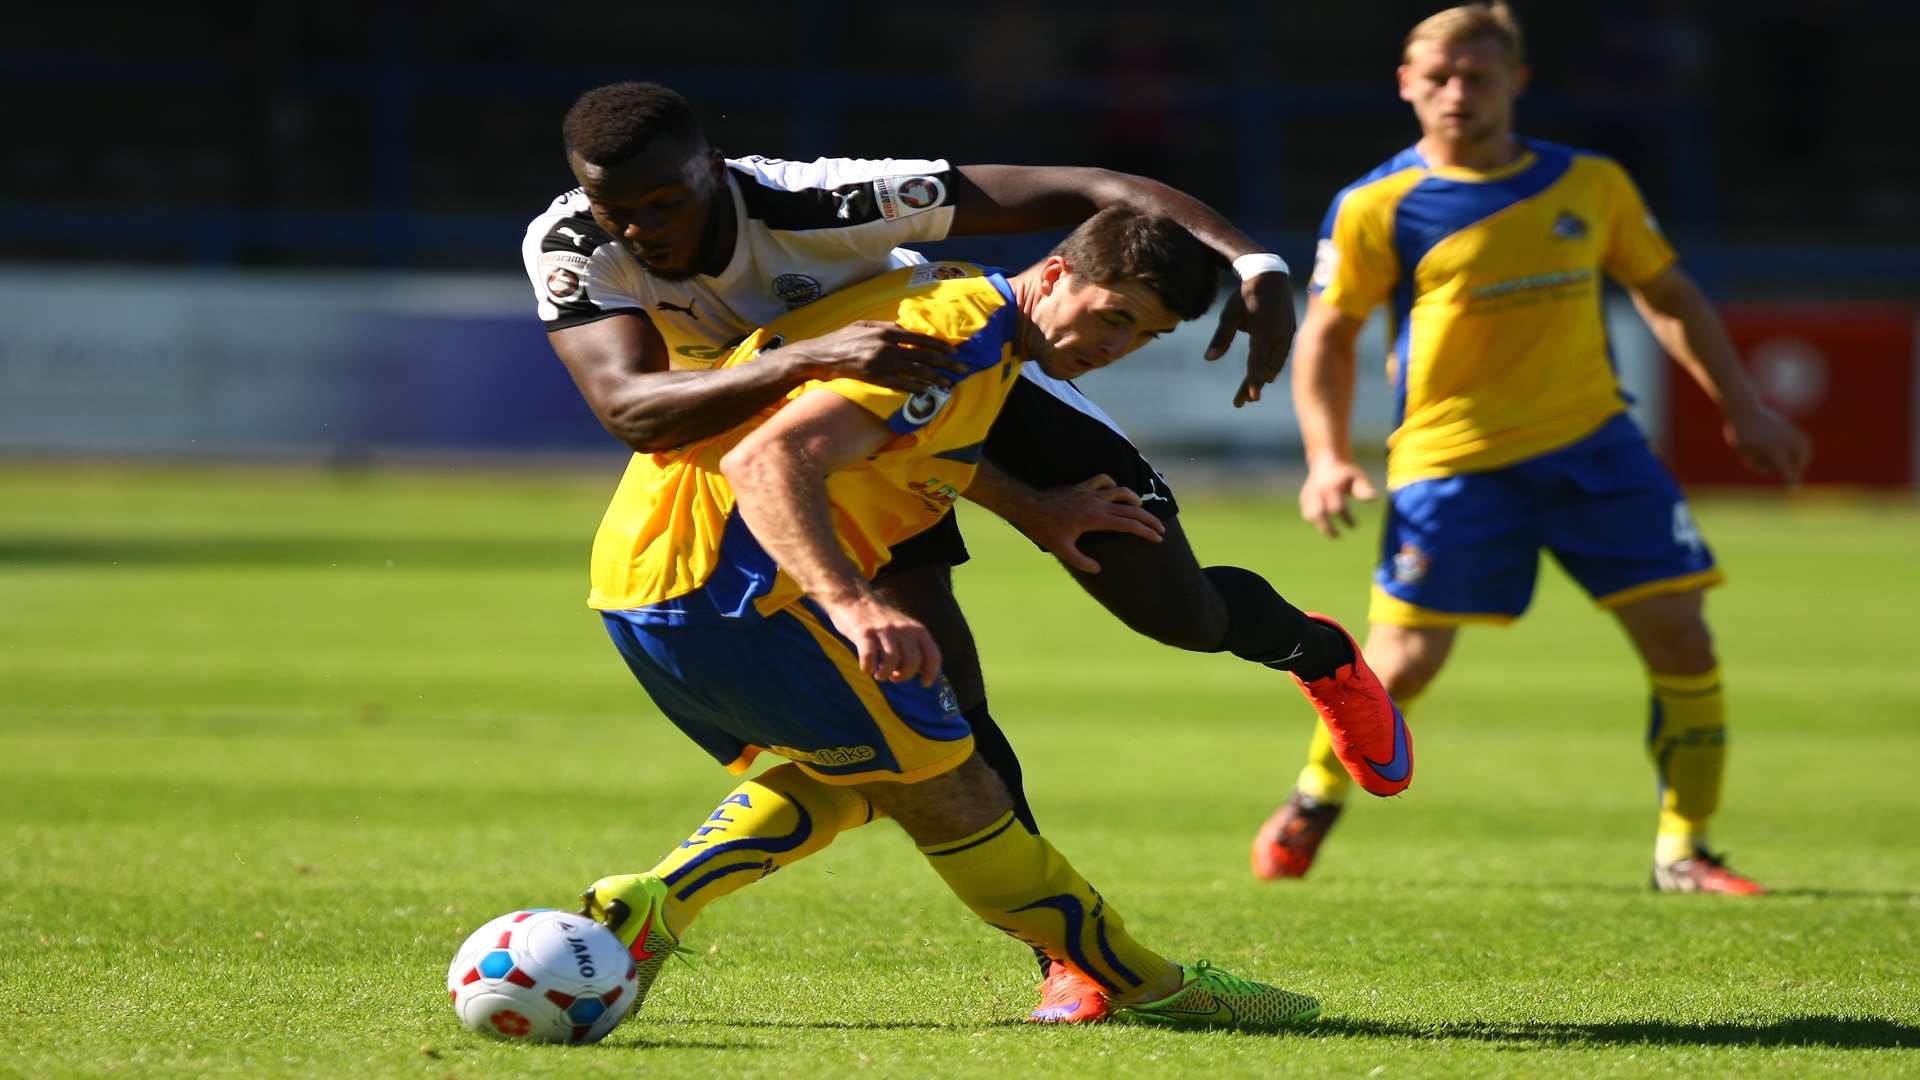 Duane Ofori-Acheampong battles for the ball against Altrincham at Crabble Picture: Matt Bristow